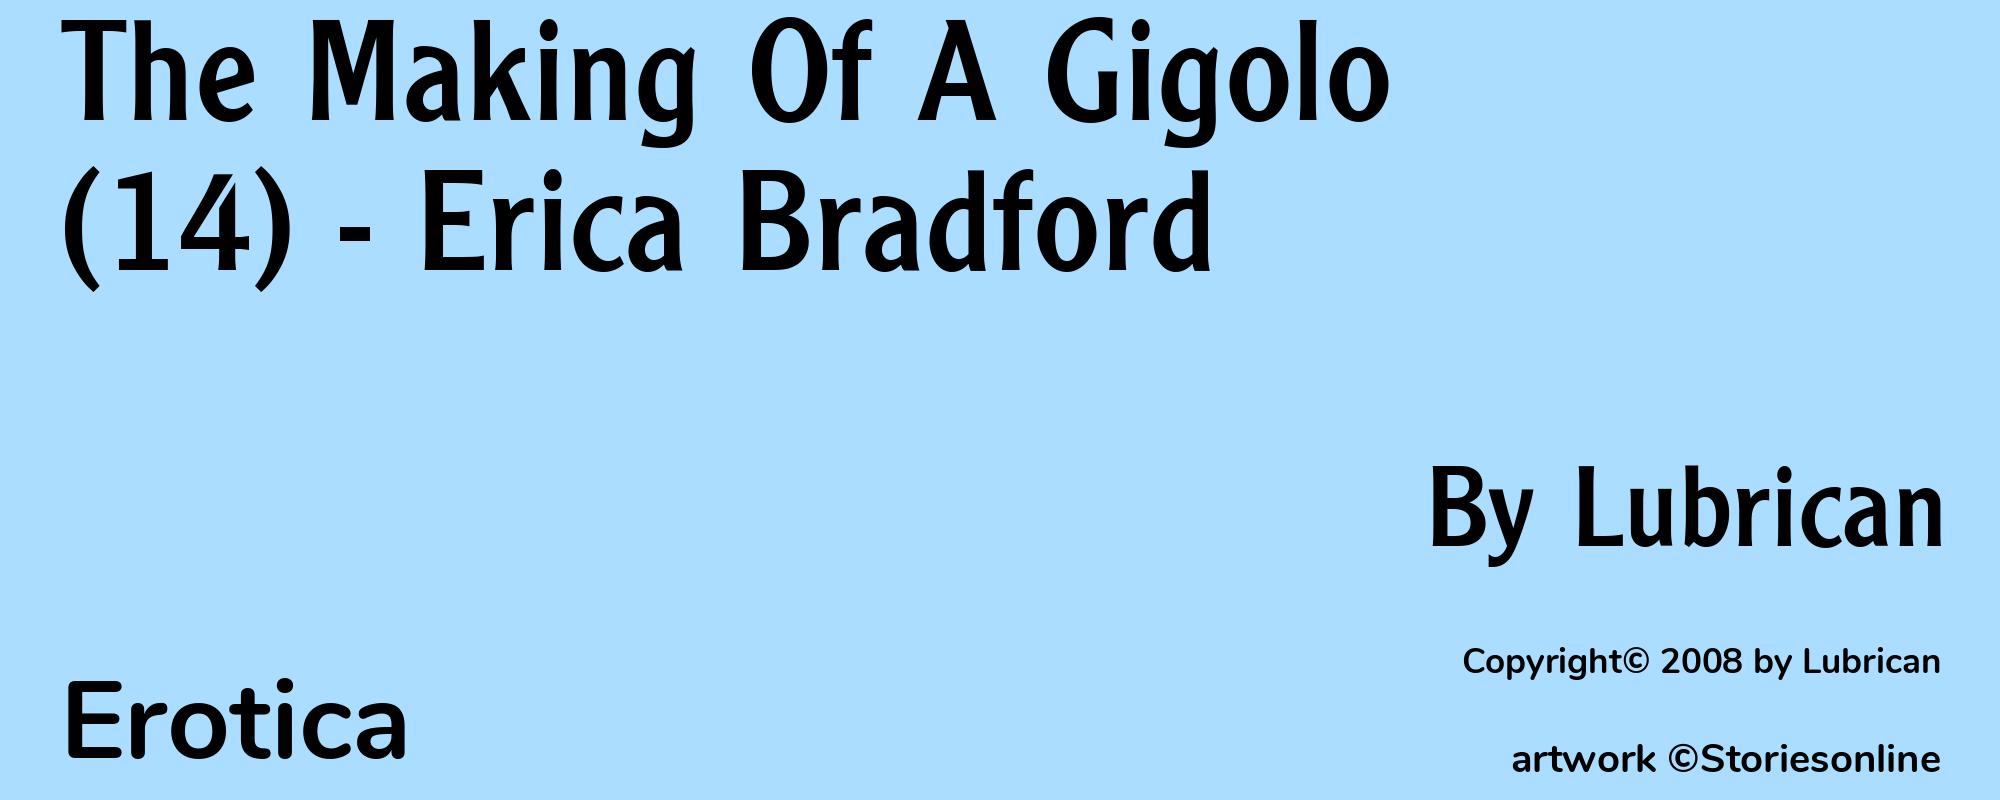 The Making Of A Gigolo (14) - Erica Bradford - Cover